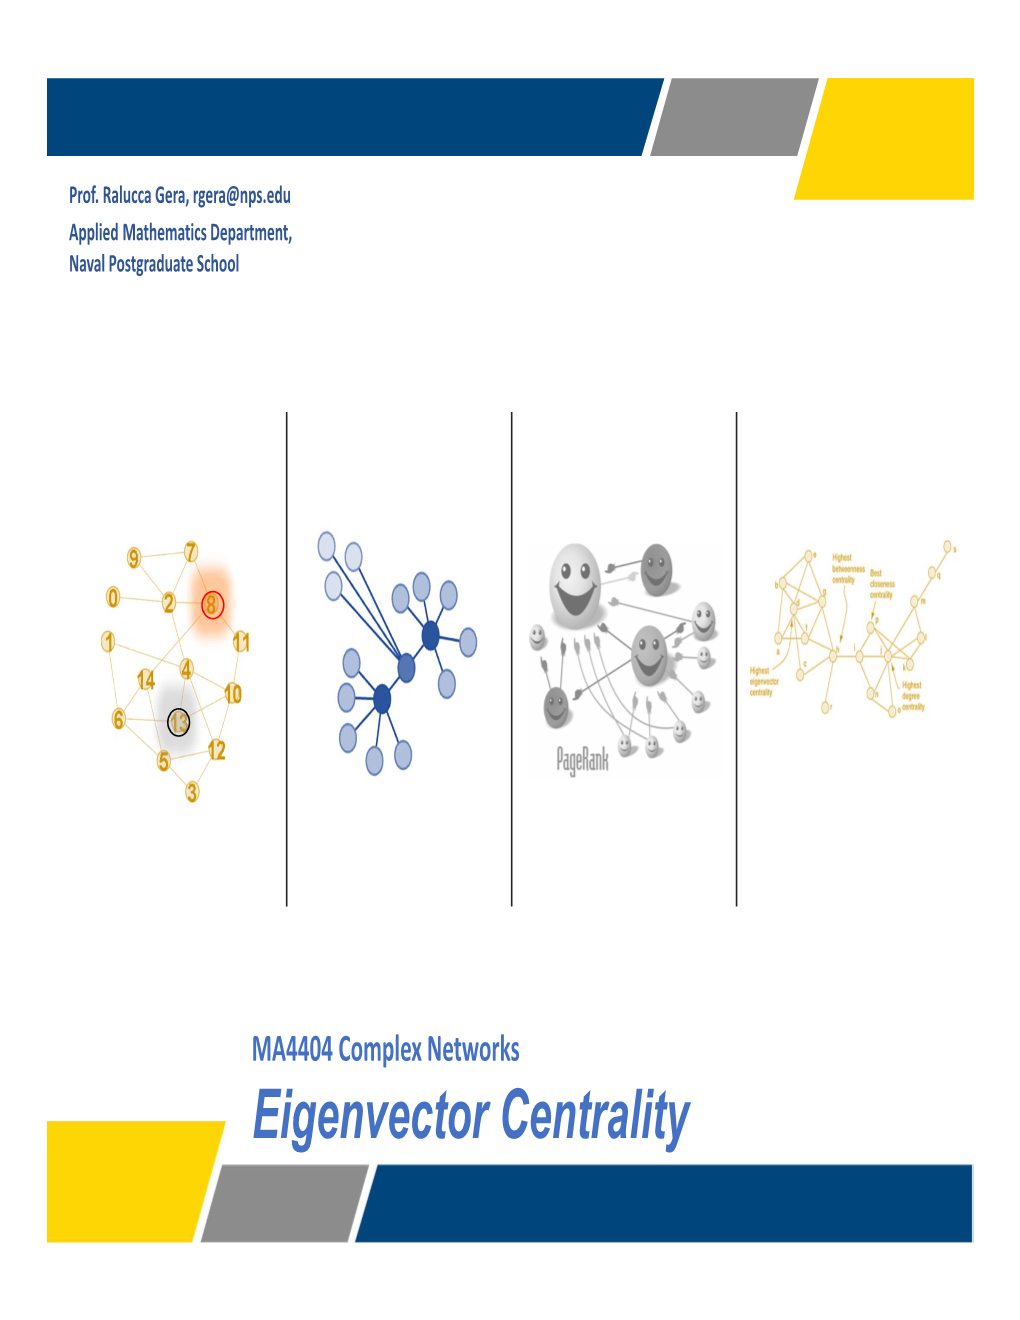 Eigenvector Centrality • Compute Eigenvector Centrality